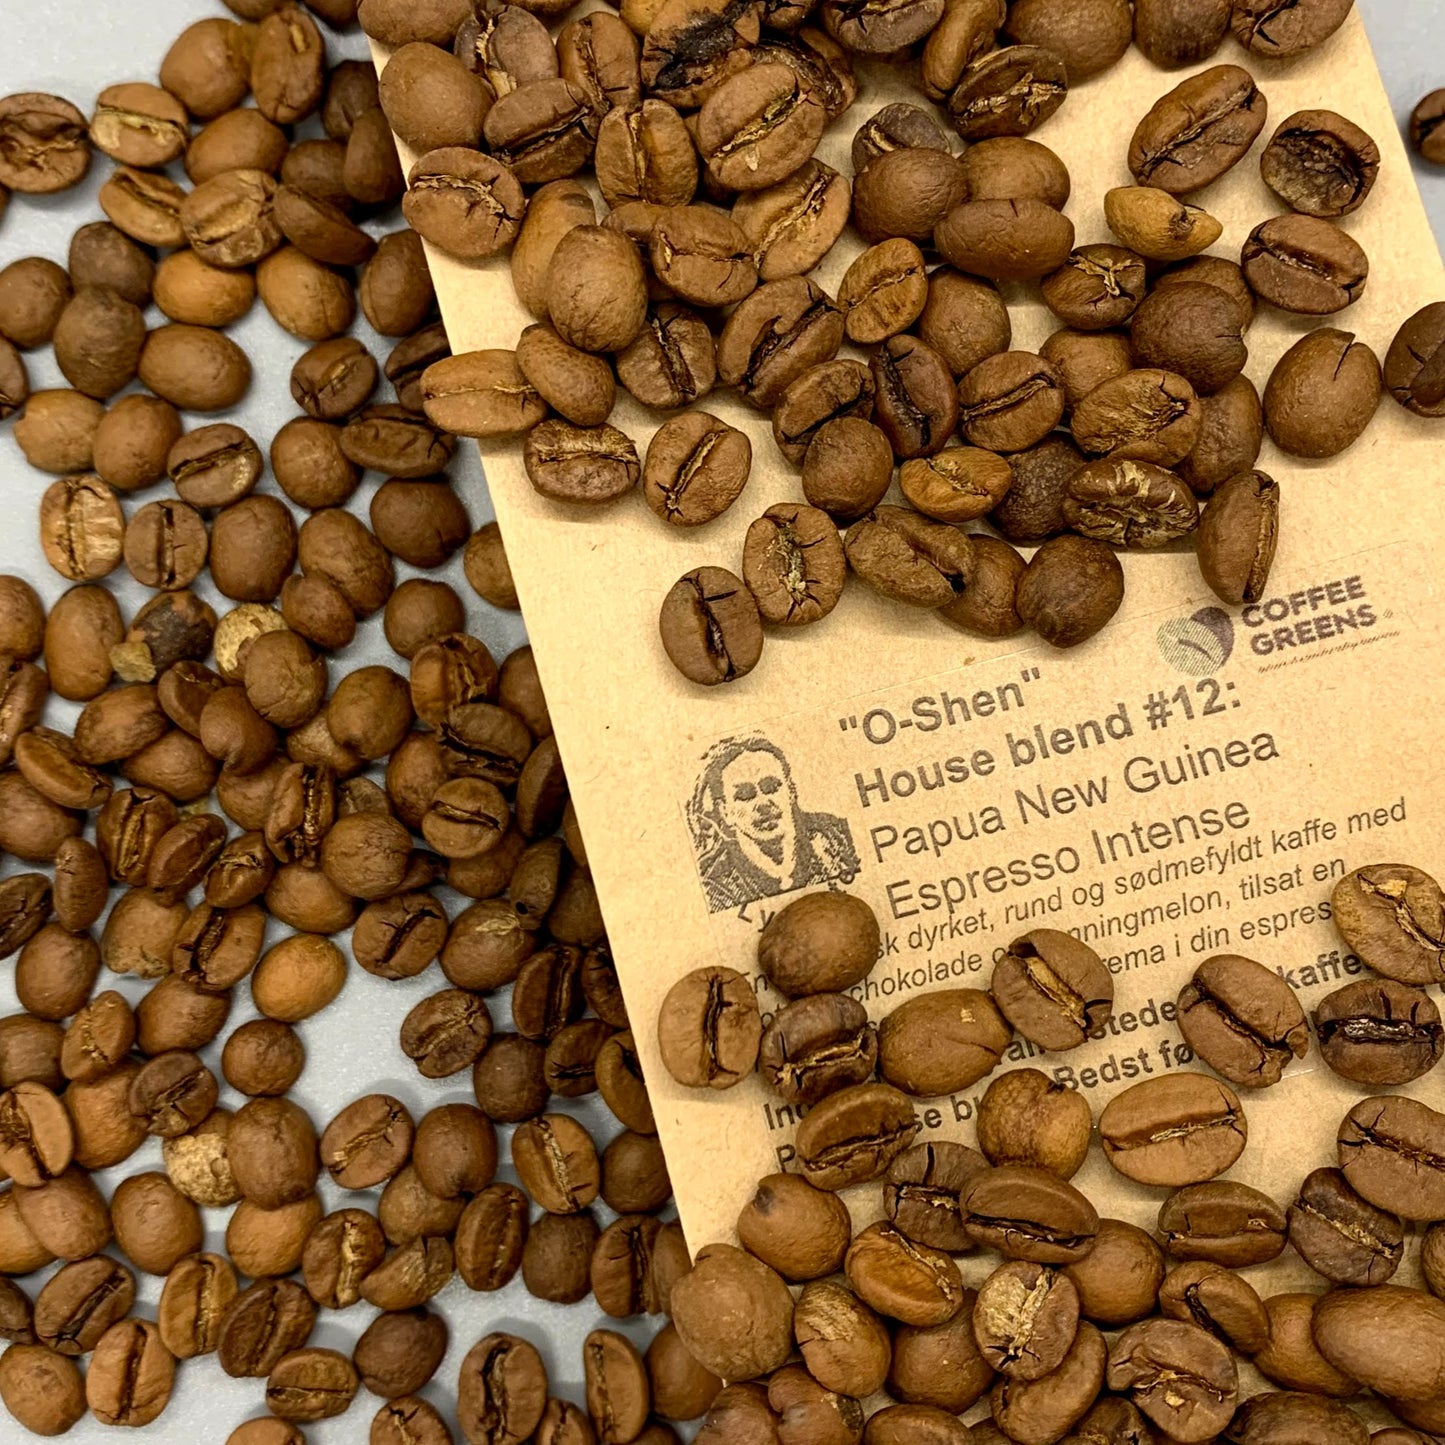 "O-Shen"- Husblandning nr 12:Papua Nya Guinea Espresso Intense - Rostade kaffebönor.